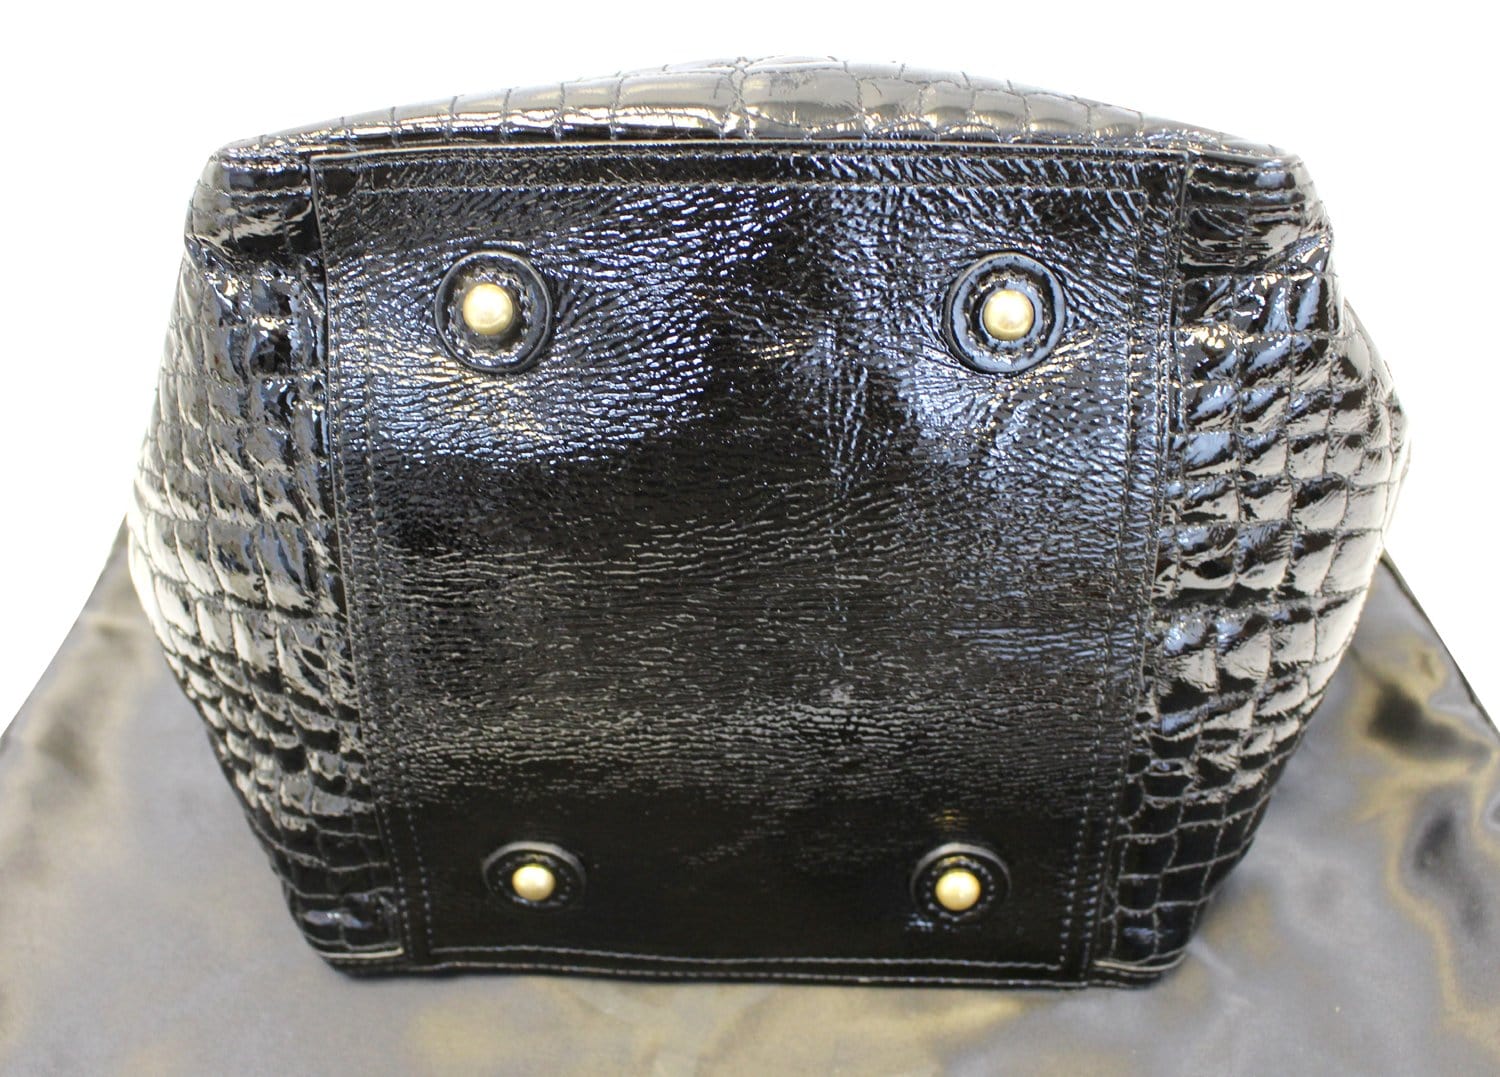 YVES SAINT LAURENT Black Patent Leather Downtown Medium Tote Bag - Las